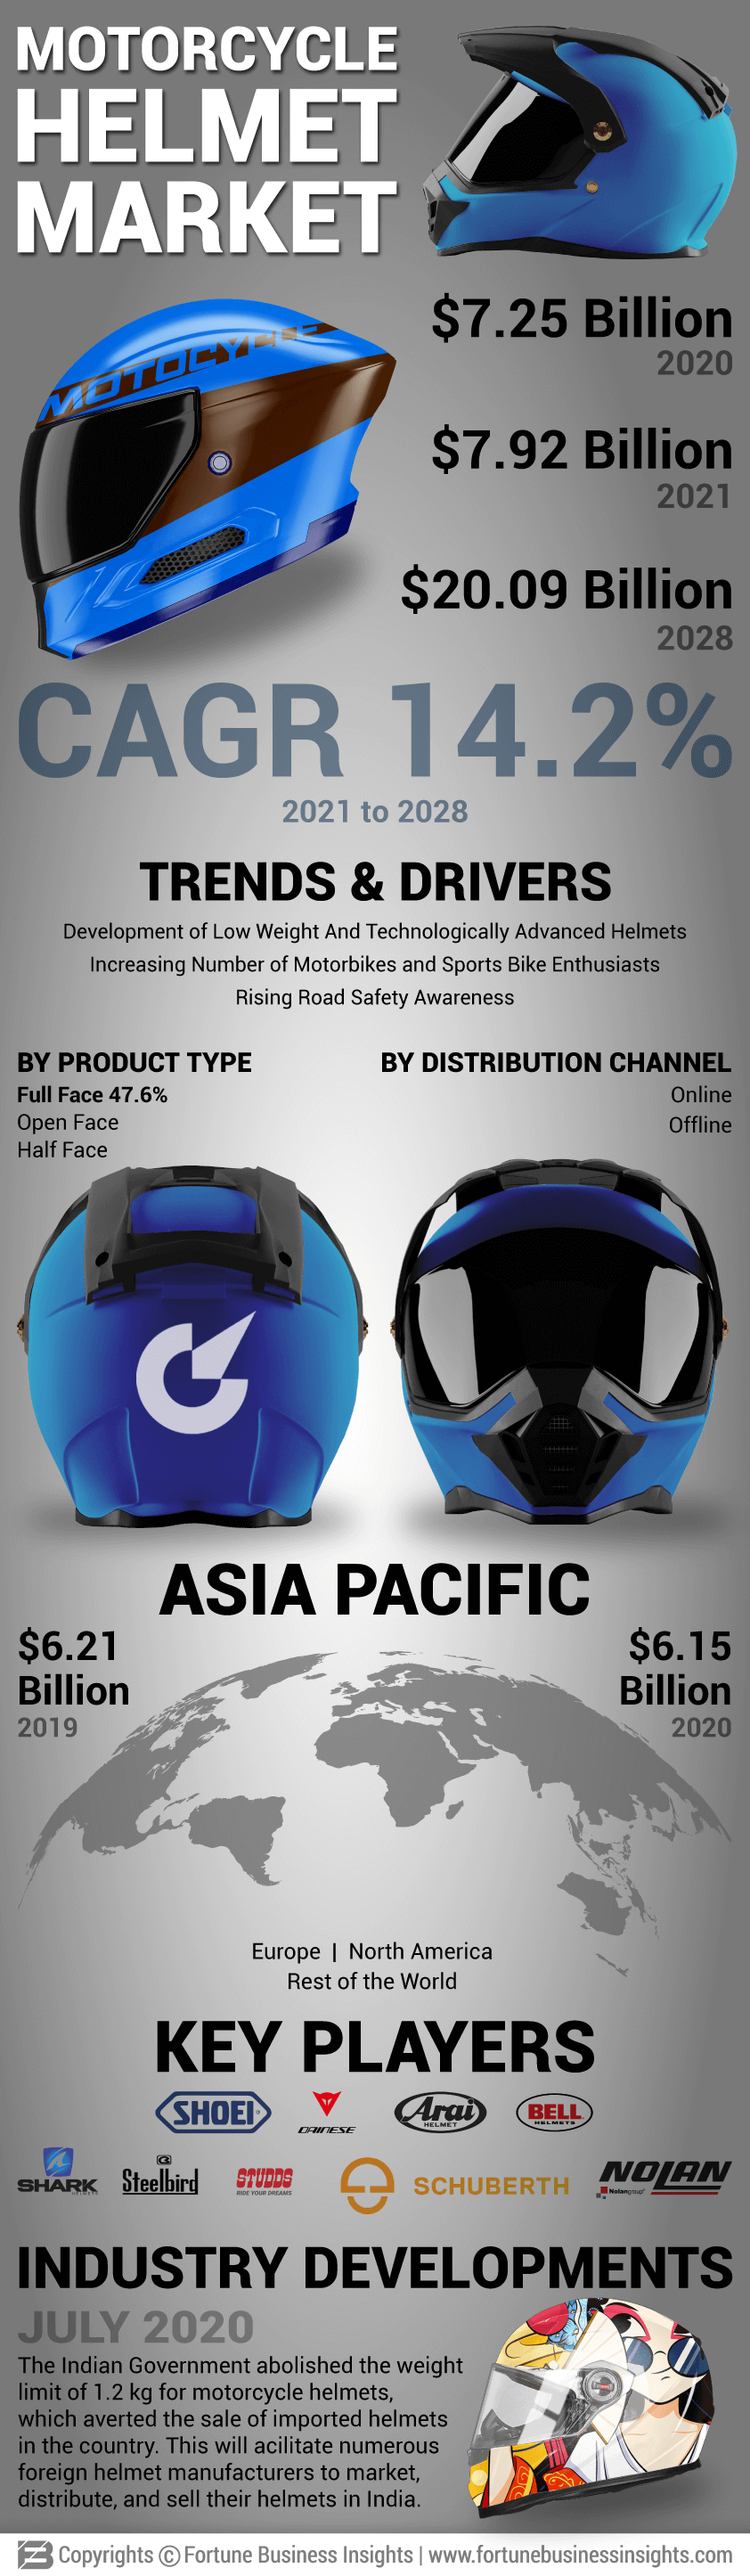 Motorcycle Helmet Market